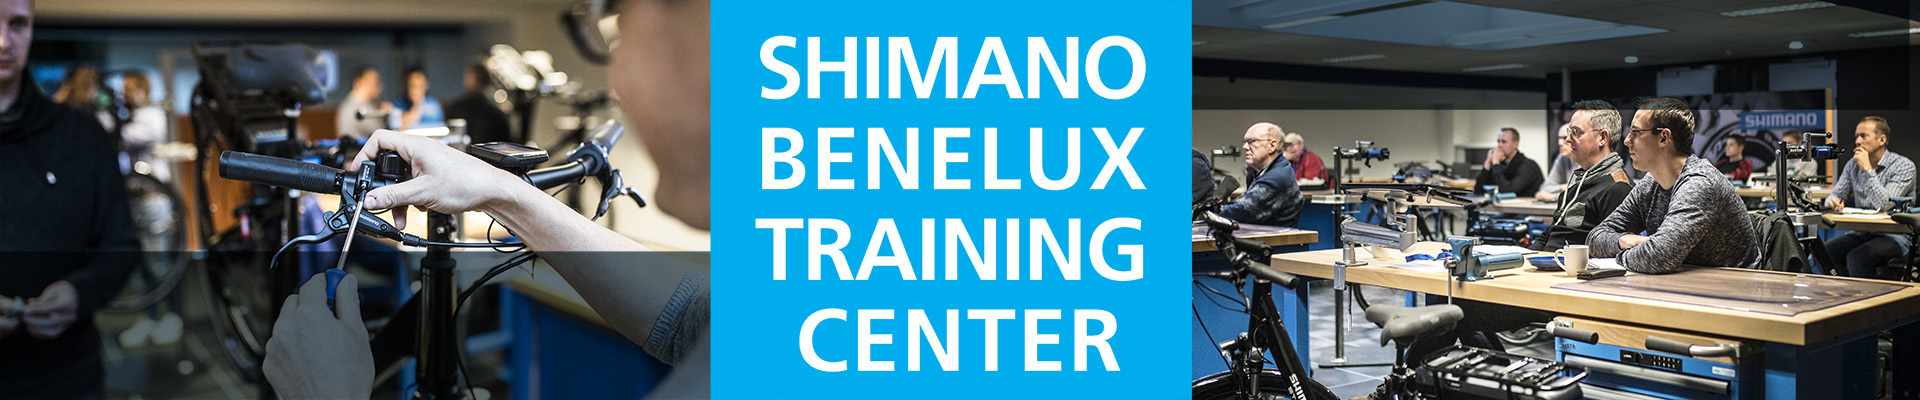 Shimano Benelux Training Center 2019 - 2020